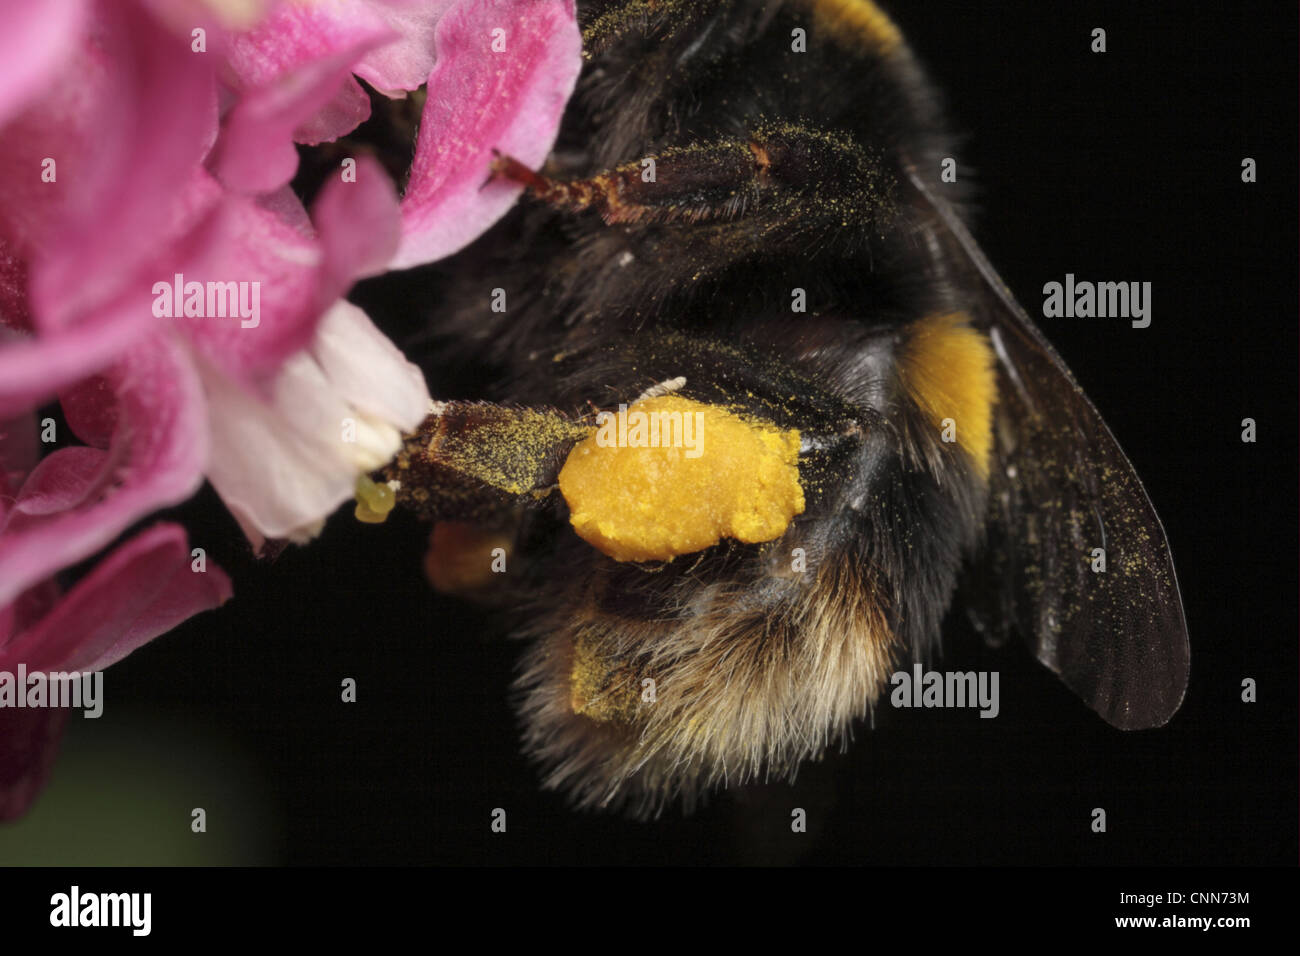 Bumblebee Apidae sp. adulti close-up completo di polline sac zampe posteriori utilizzati pettine di polline di sacche di polline dopo la visita di fiori Foto Stock